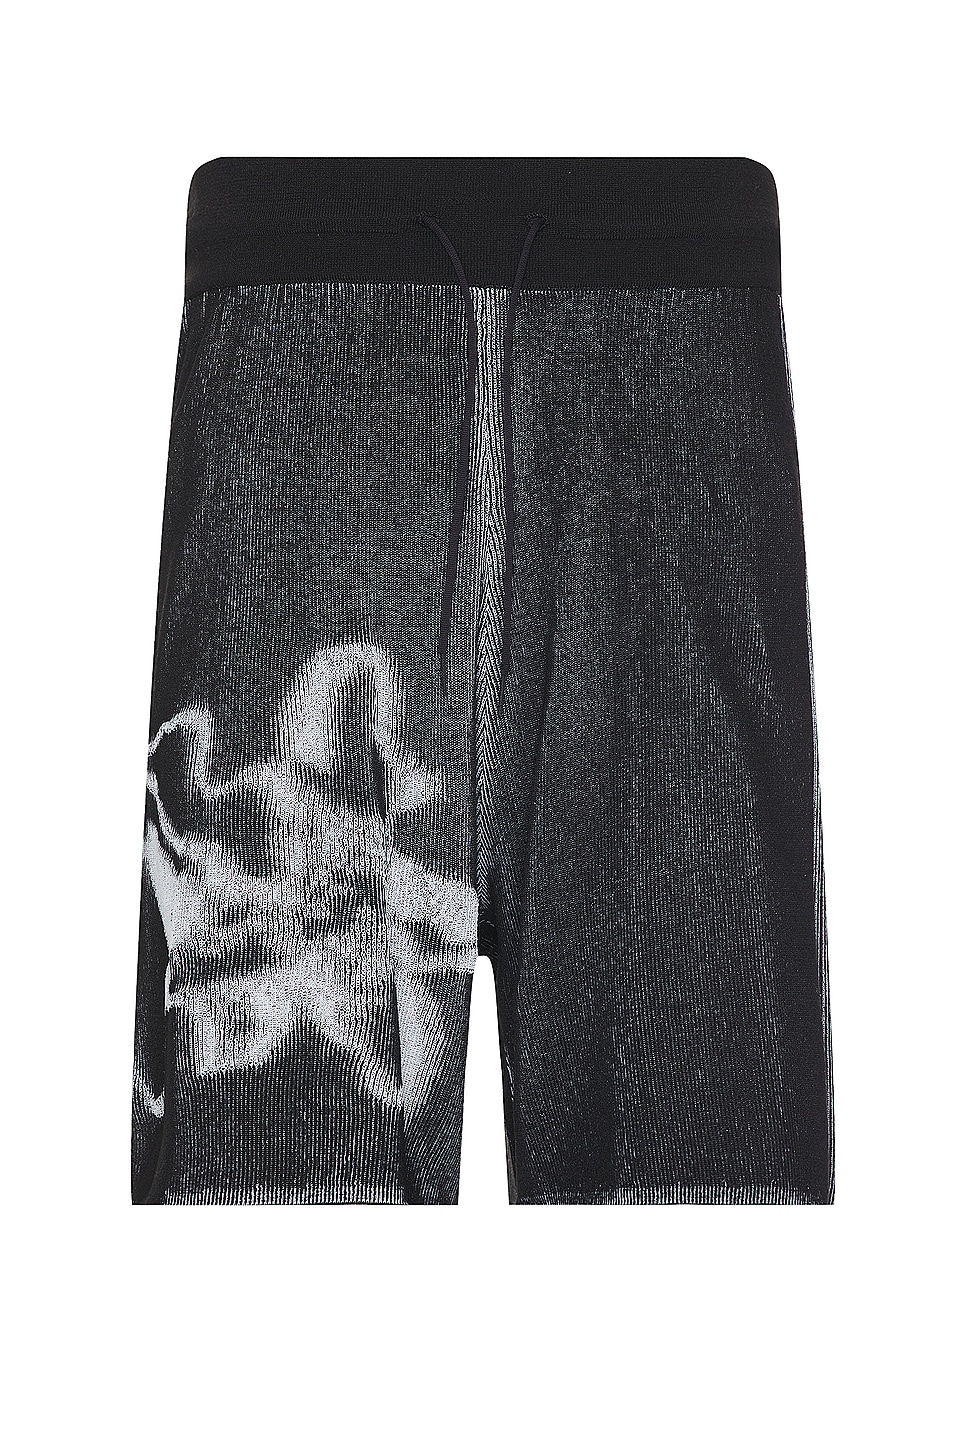 Gfx Knit Shorts in Black